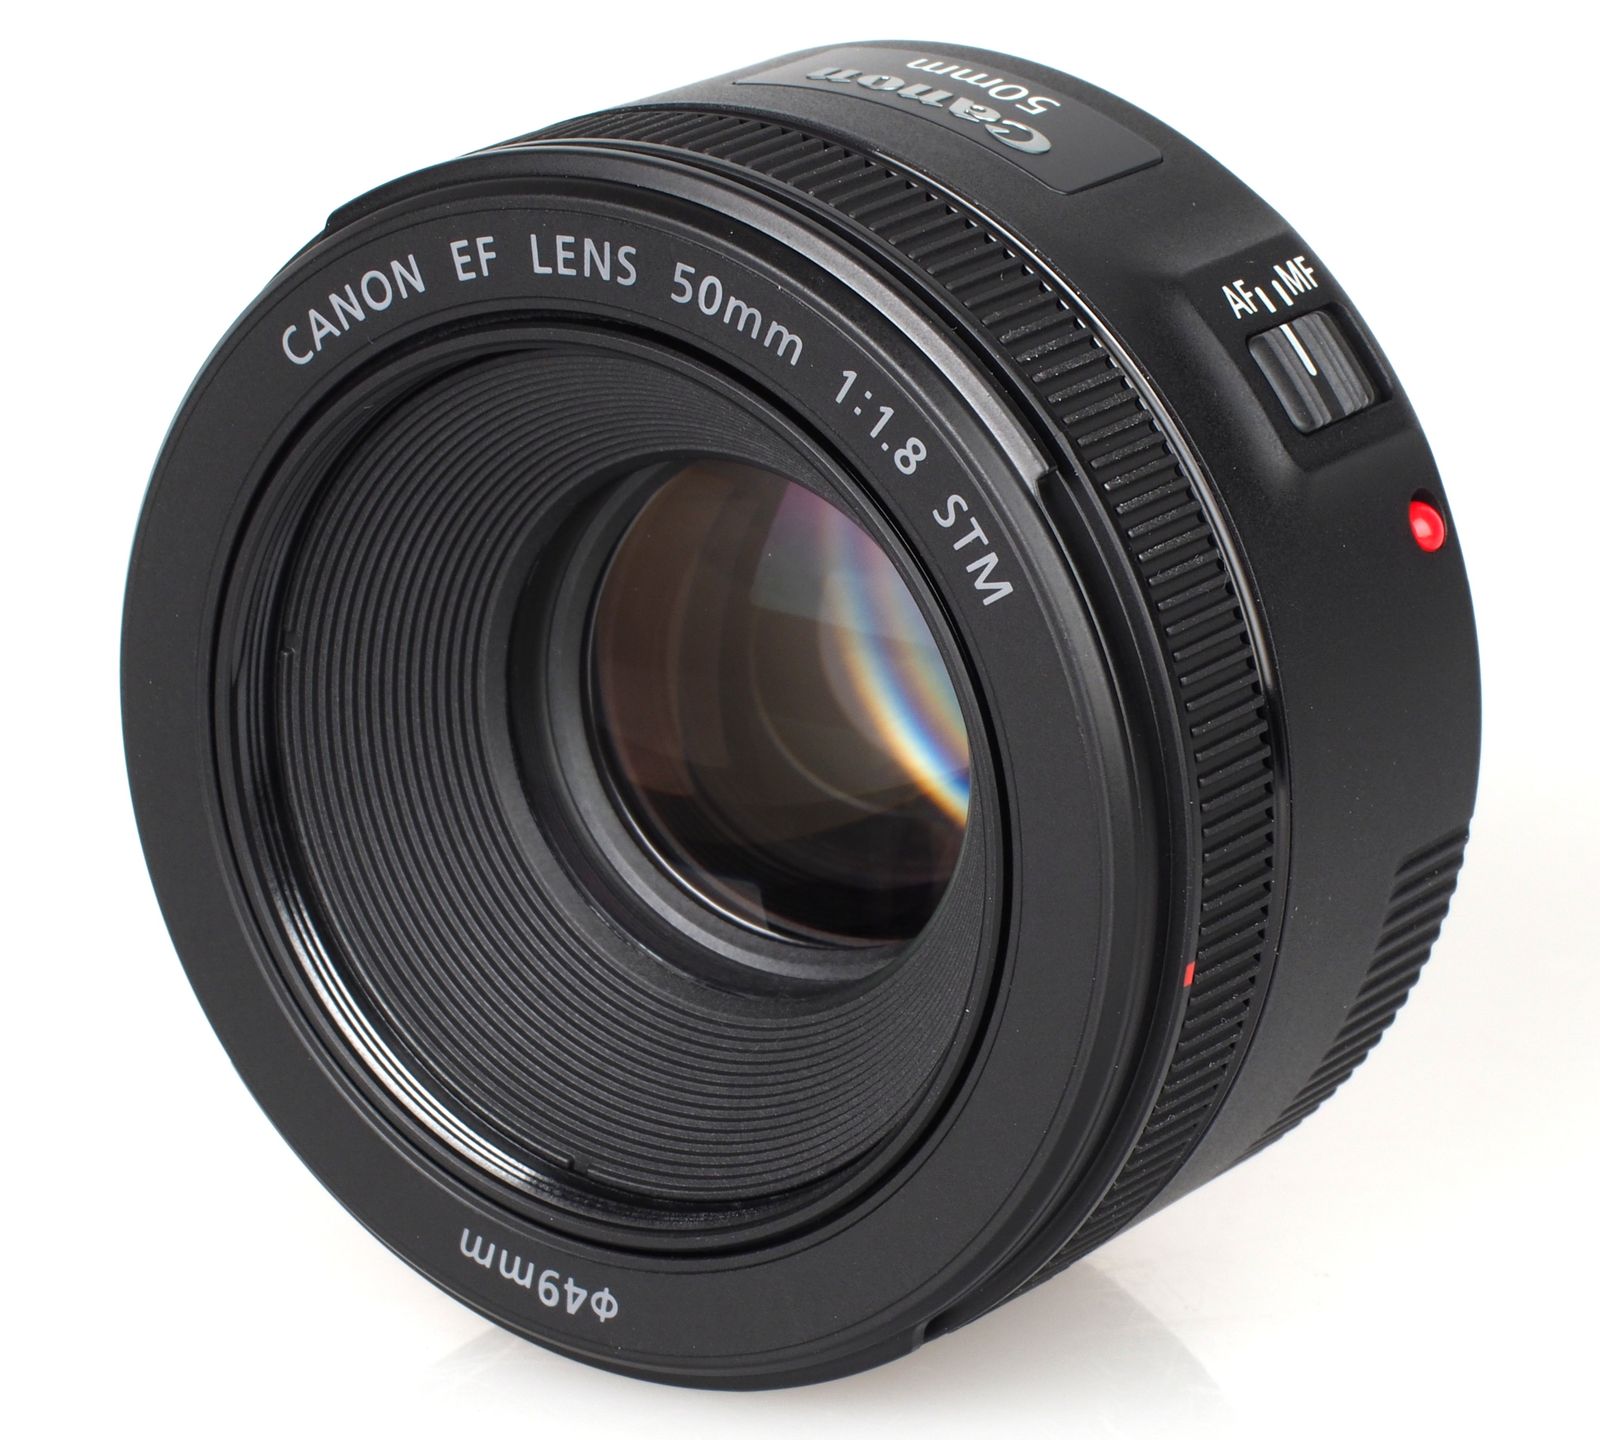 Canon EF 50mm f/1.8 STM Lens Review